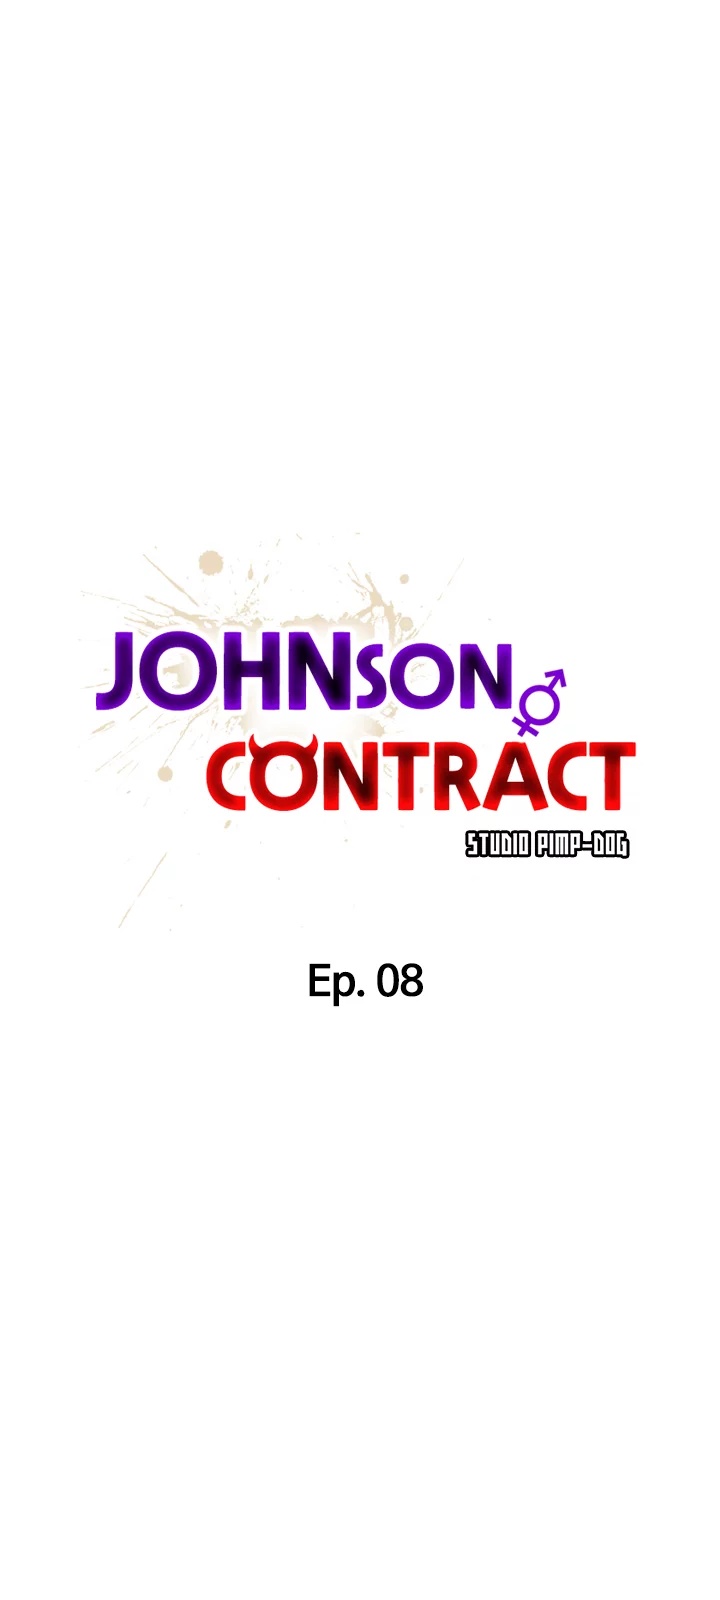 JOHNSON CONTRACT image